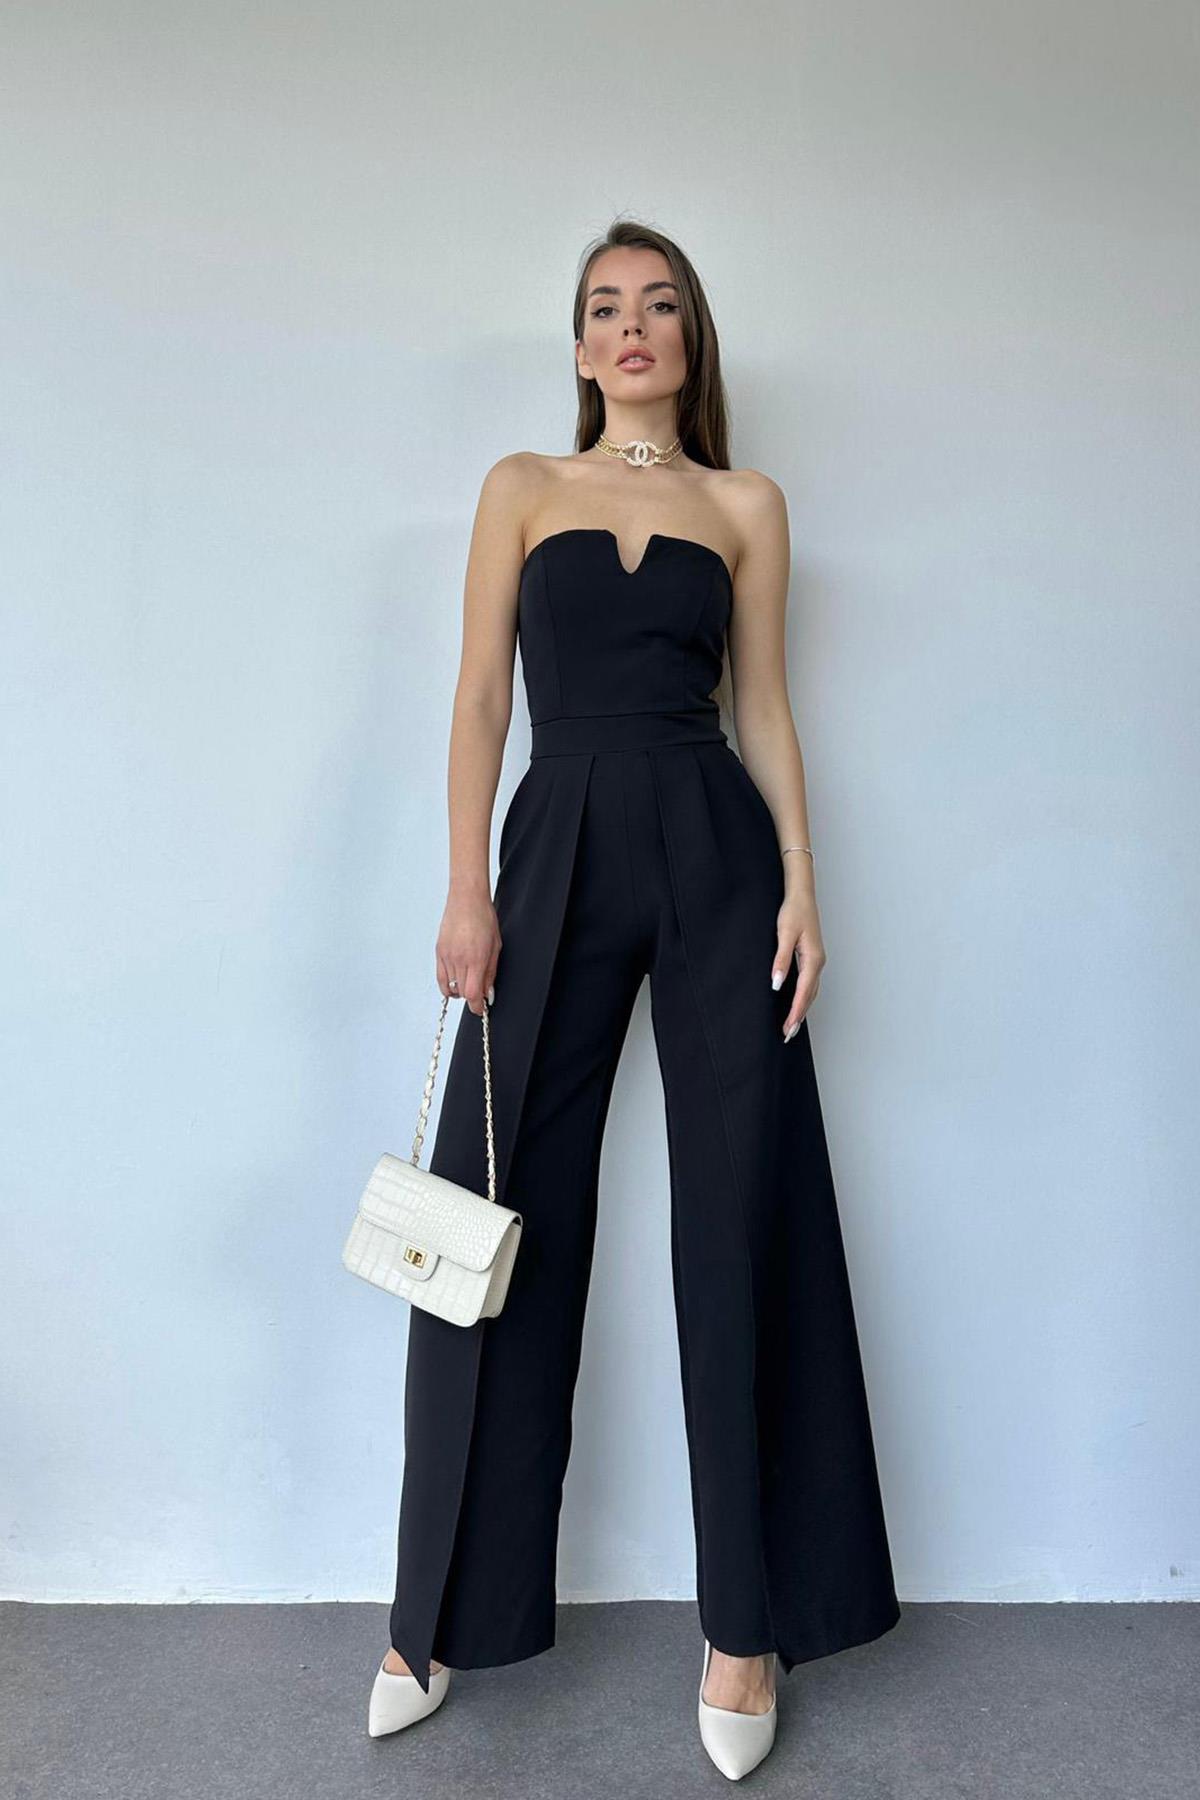 A model wears ELS10151 - Slit Detailed Strapless Jumpsuit - Black, wholesale Jumpsuit of Elisa to display at Lonca